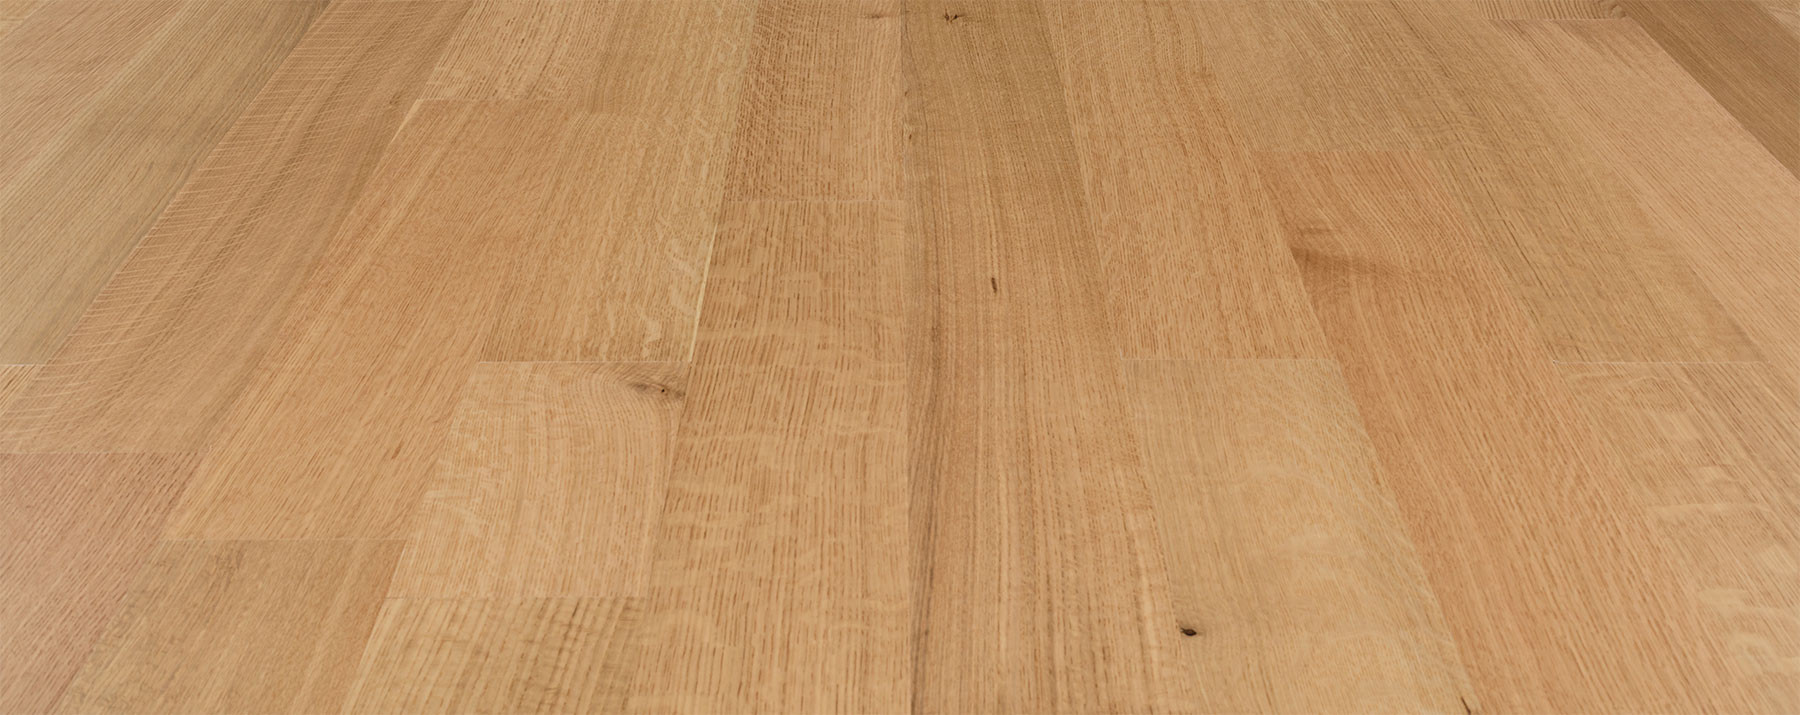 3 1 4 white oak hardwood flooring of american quartered white oak 5″ etx surfaces within etx surfaces american quartered white oak wood flooring